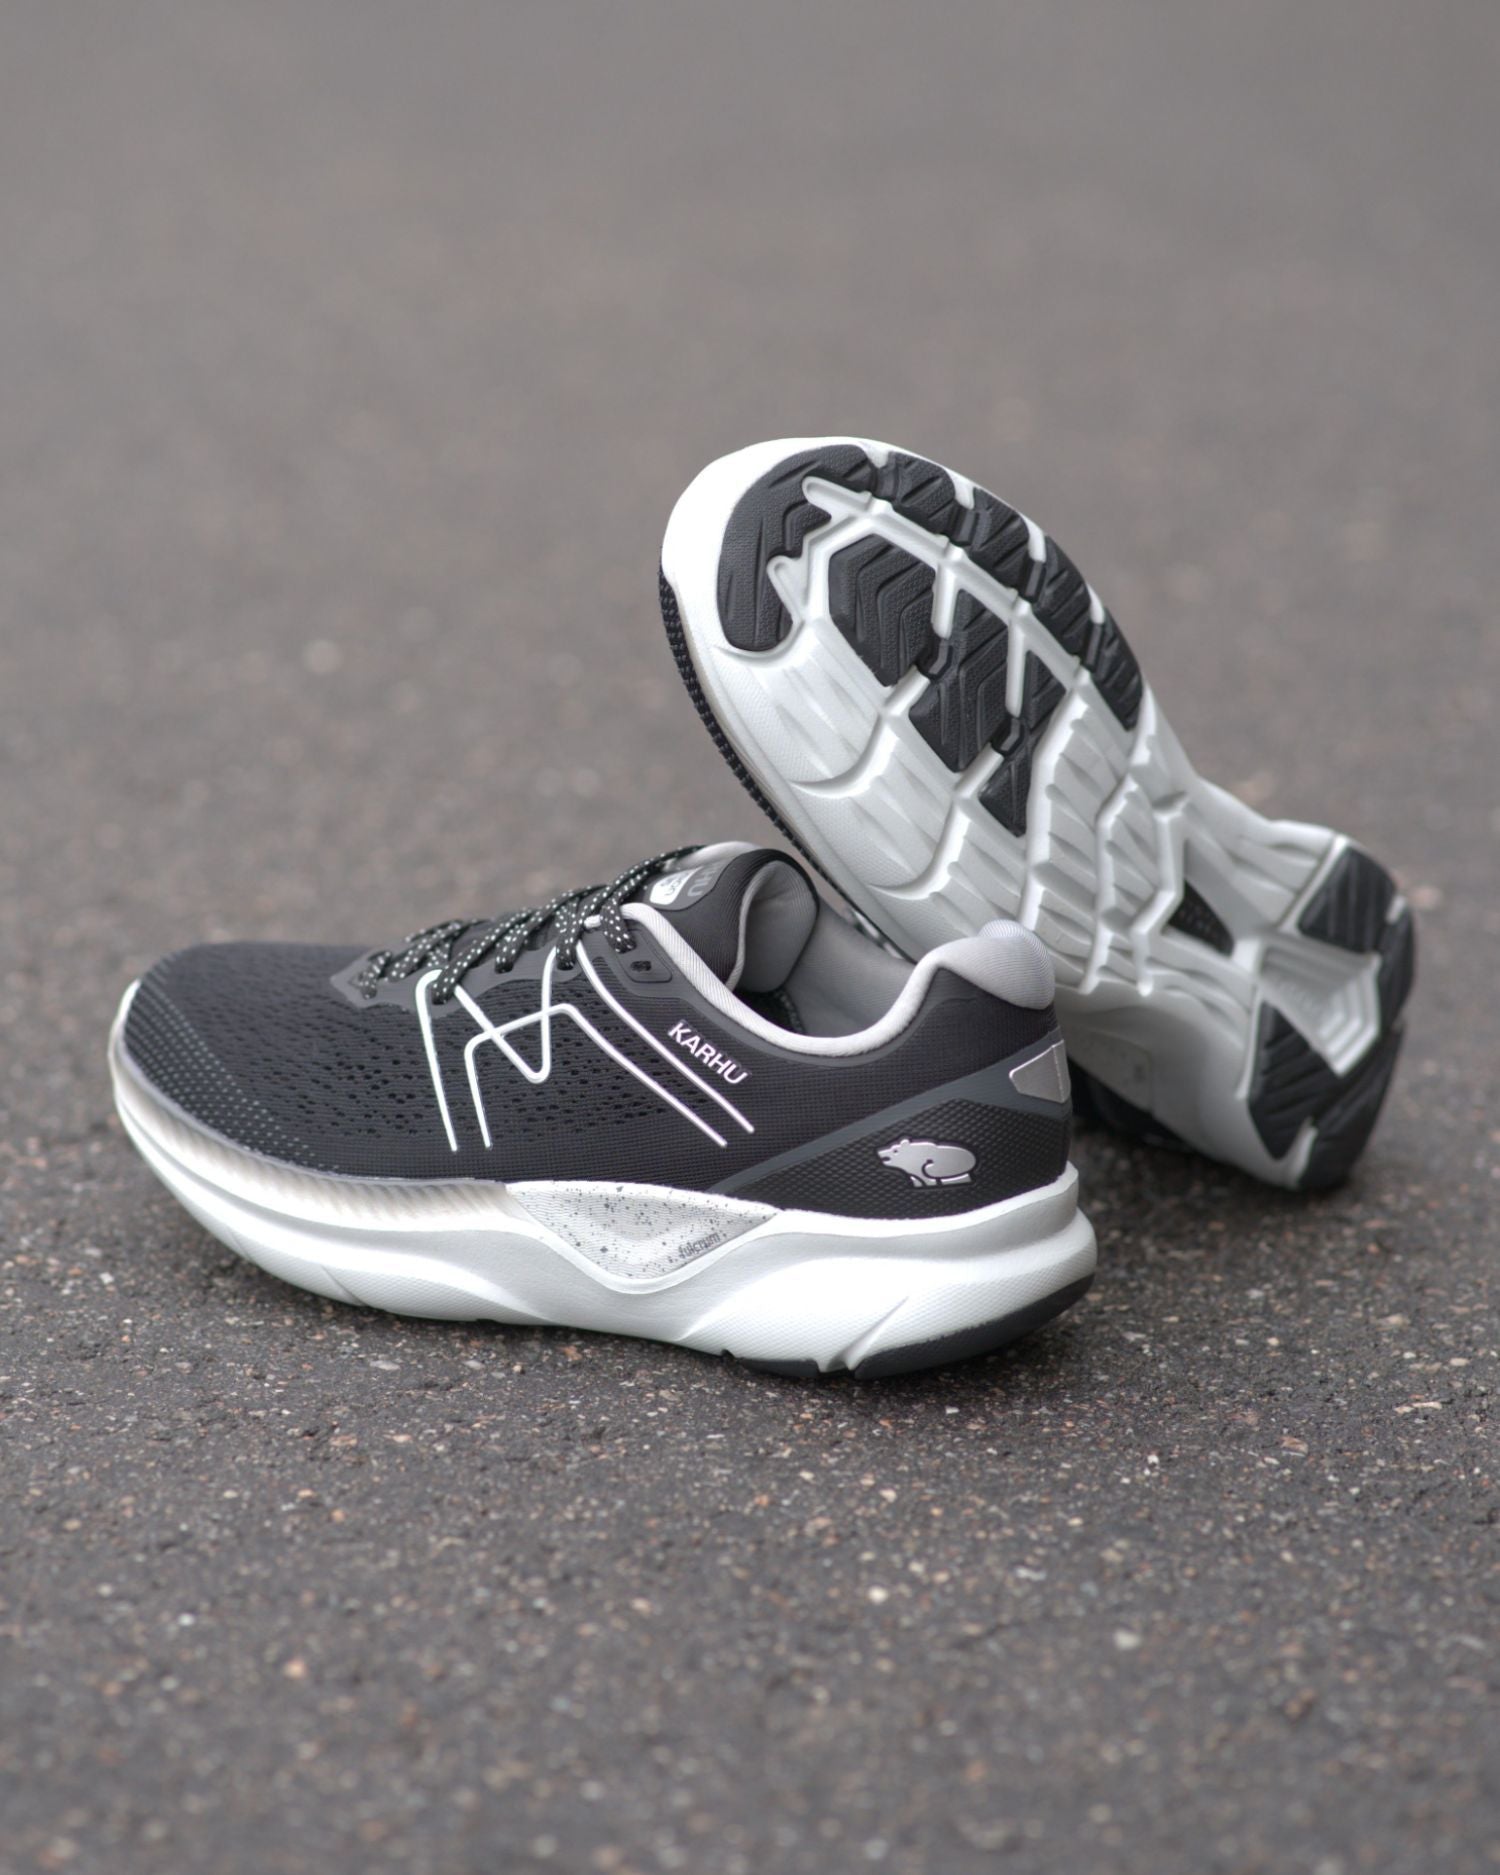 Karhu Fusion 3.5 running shoe, for the neutral runner. – Karhu US